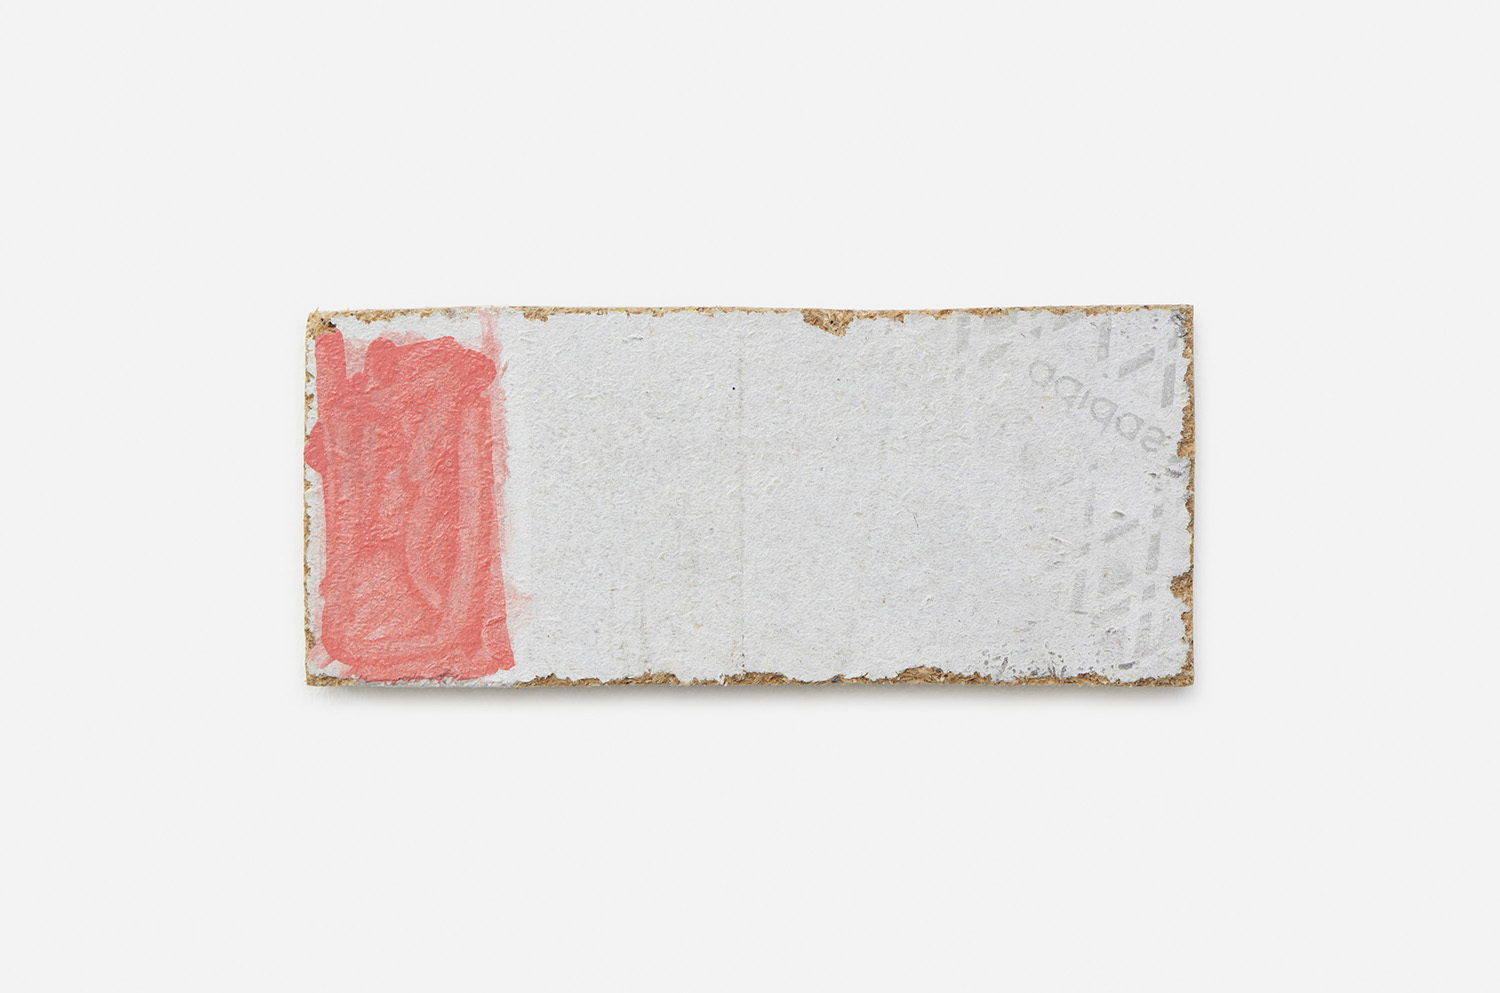 Ulrike Schulze, Adidas, 2021. Painted chipboard, 6.5 x 15 x 1.6 cm